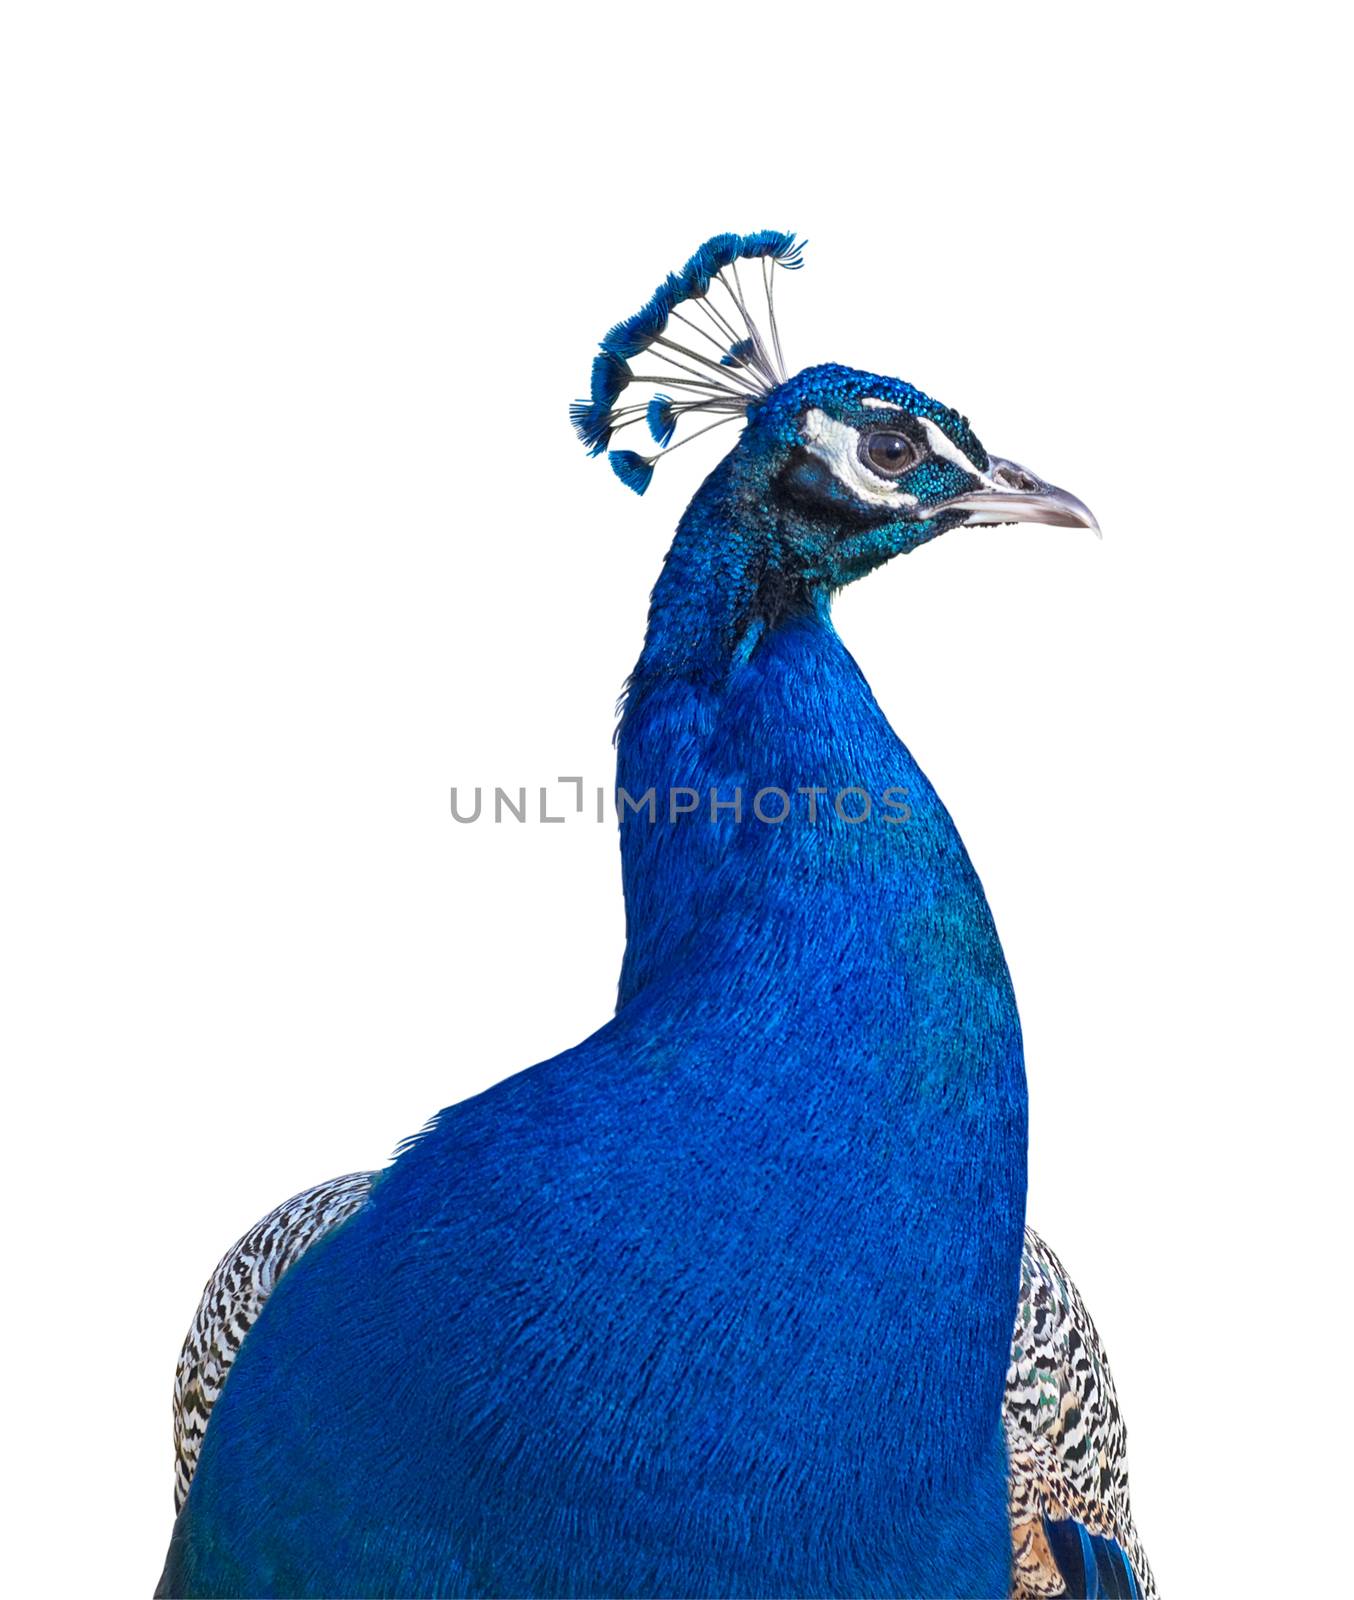 Peacock portrait cutout by vkstudio